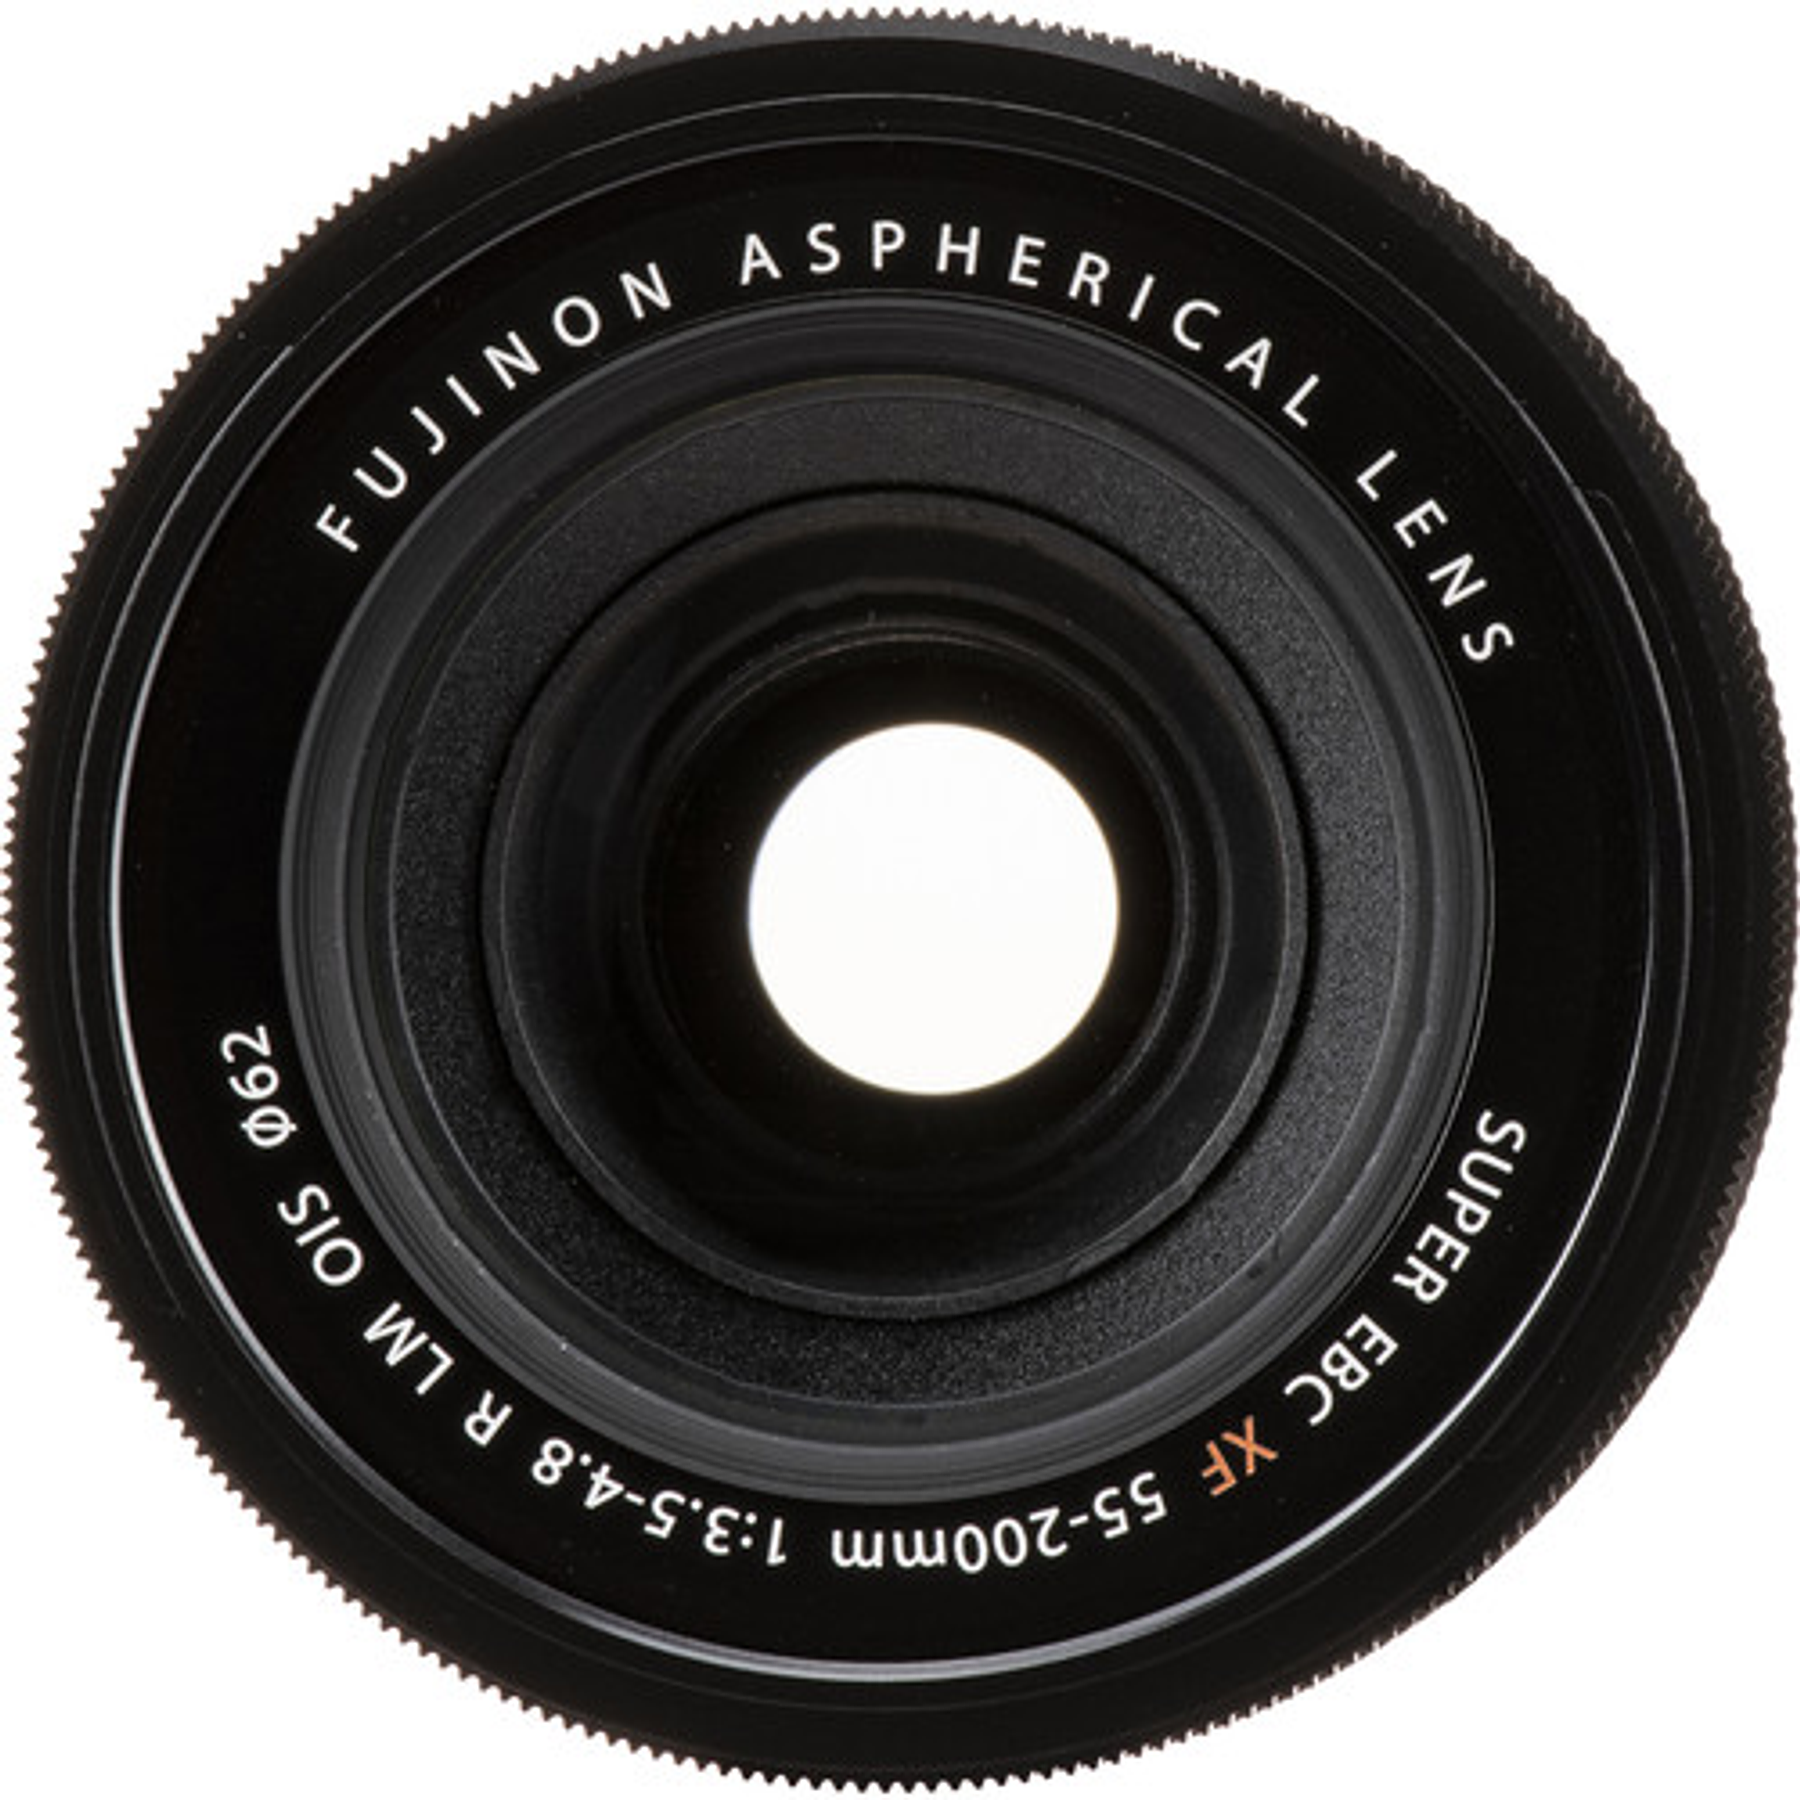 FUJIFILM XF55-200mm F3.5-4.8 R LM OIS - レンズ(ズーム)